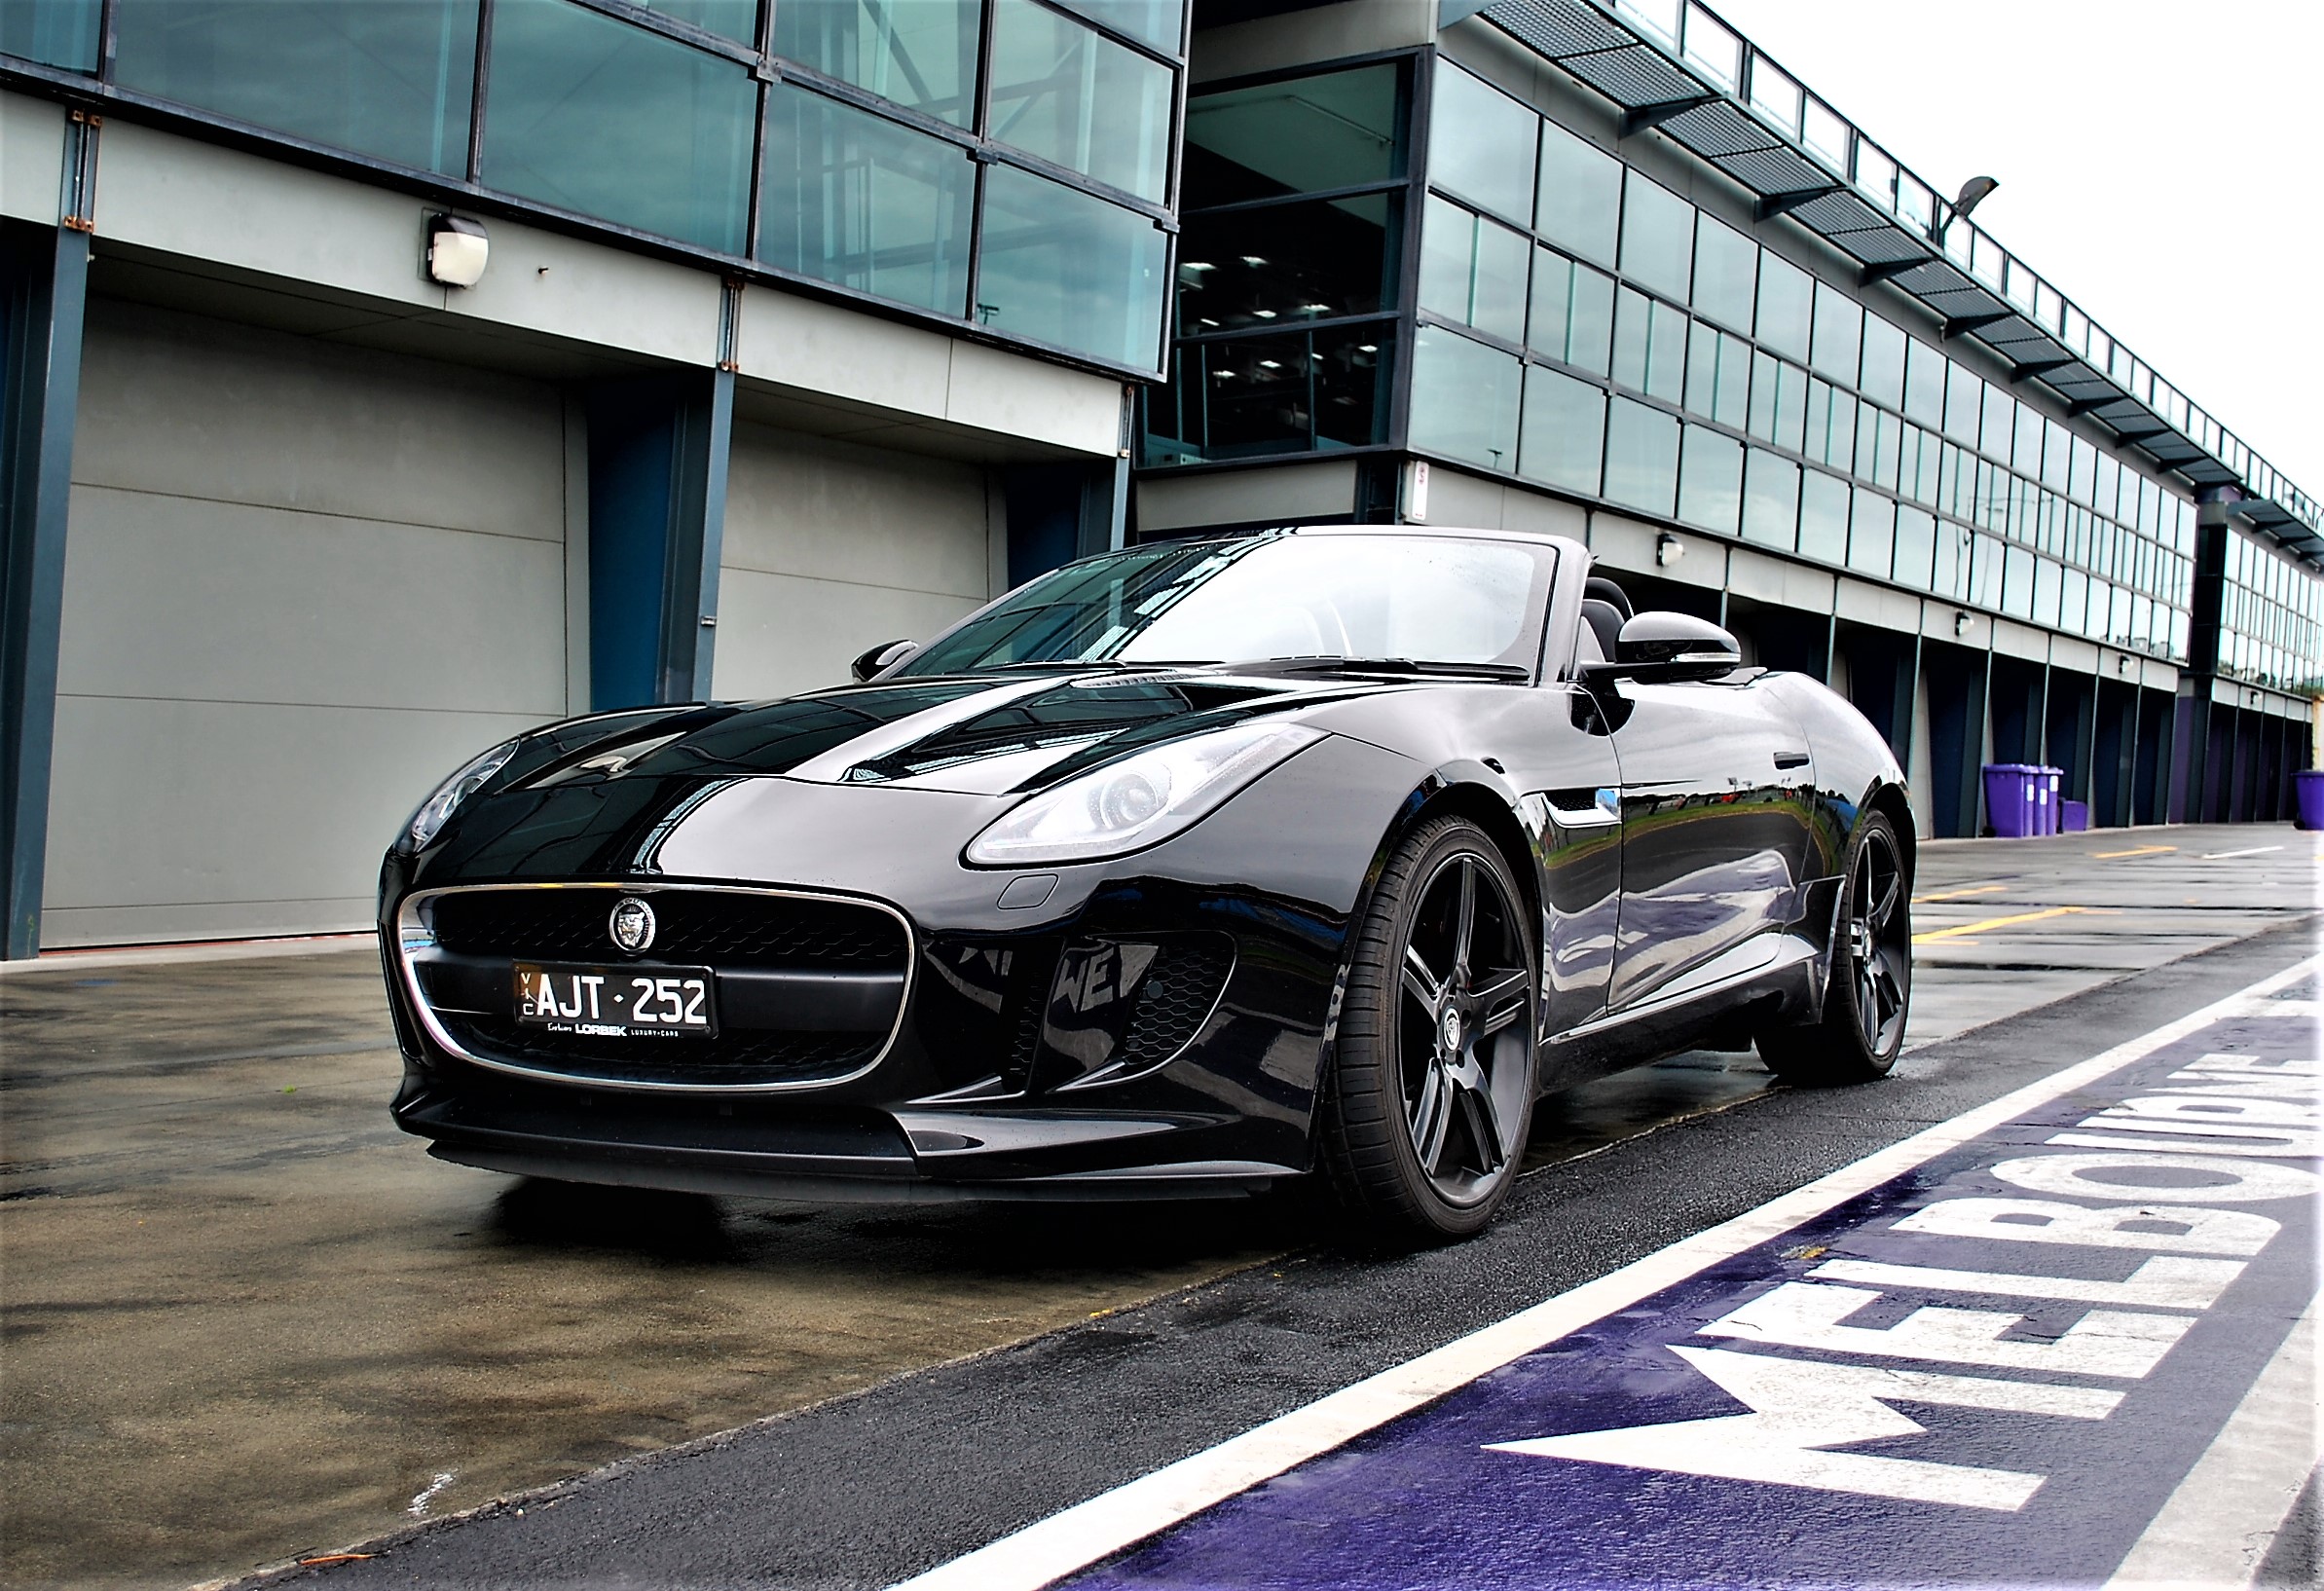 2013 Jaguar F-TYPE Convertible - Find Me Cars